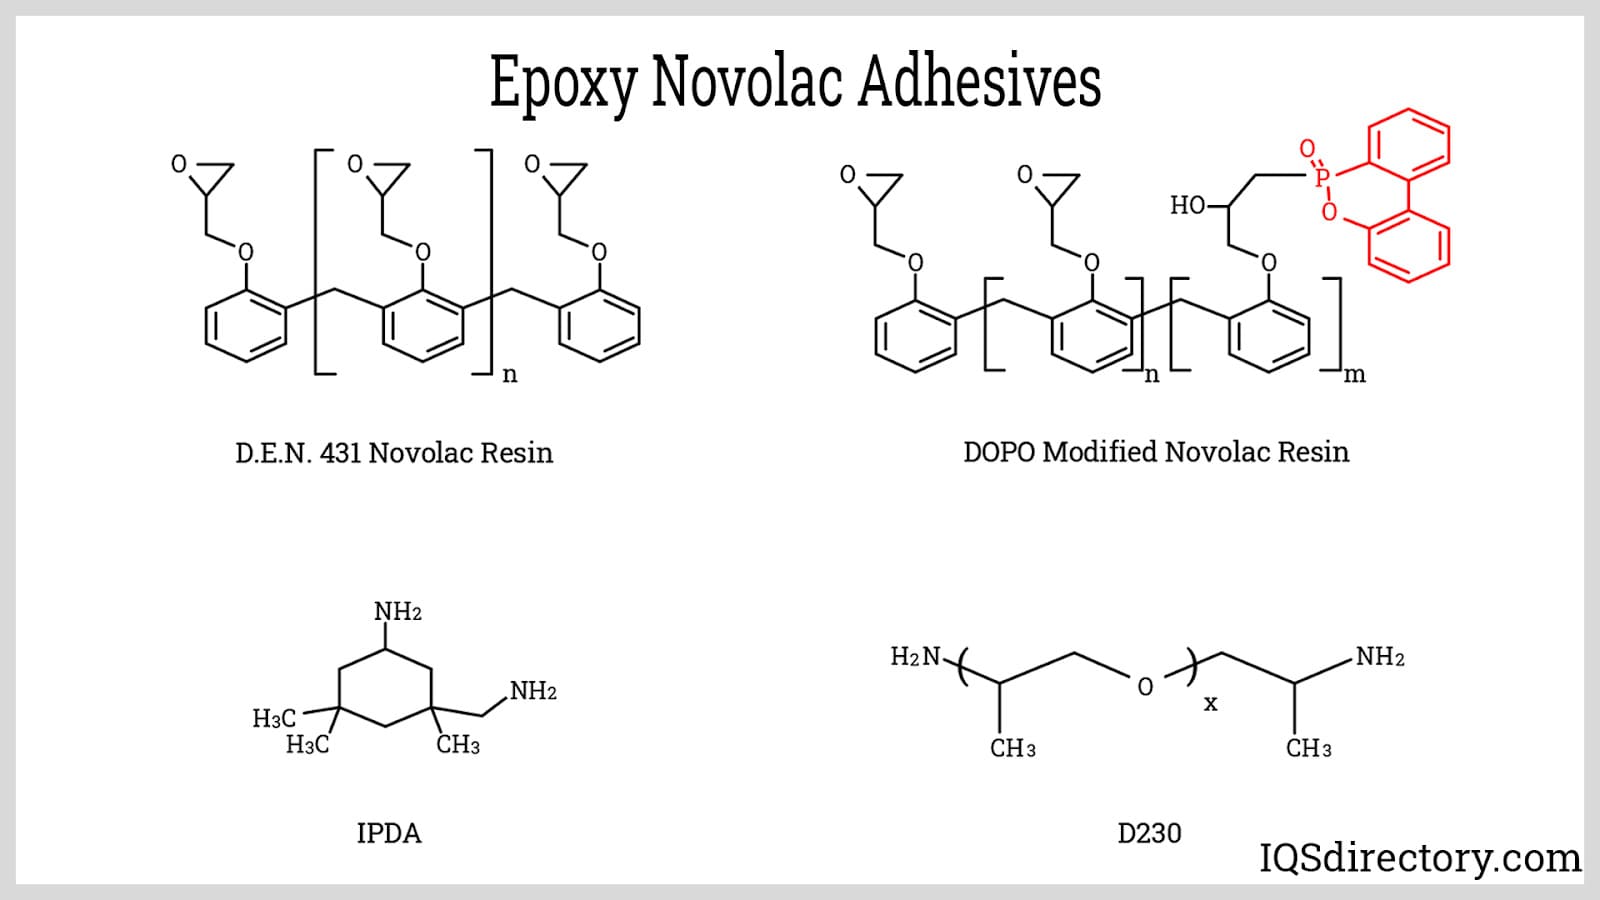 Epoxy Novolac Adhesives